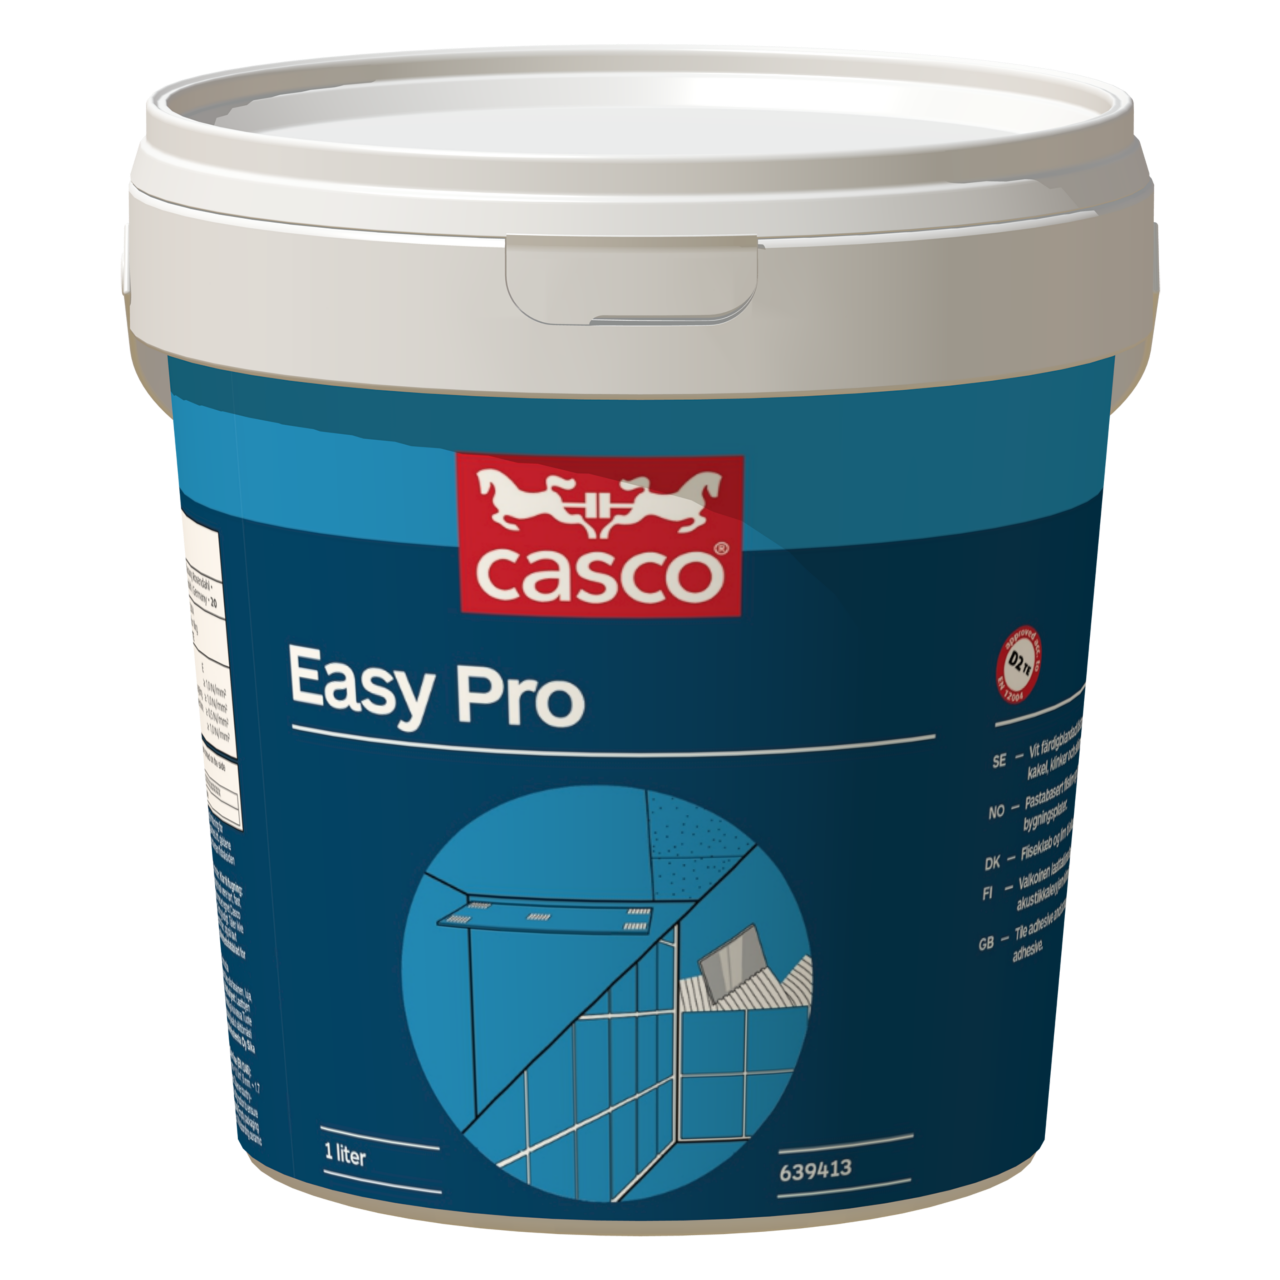 Cascol EasyPro